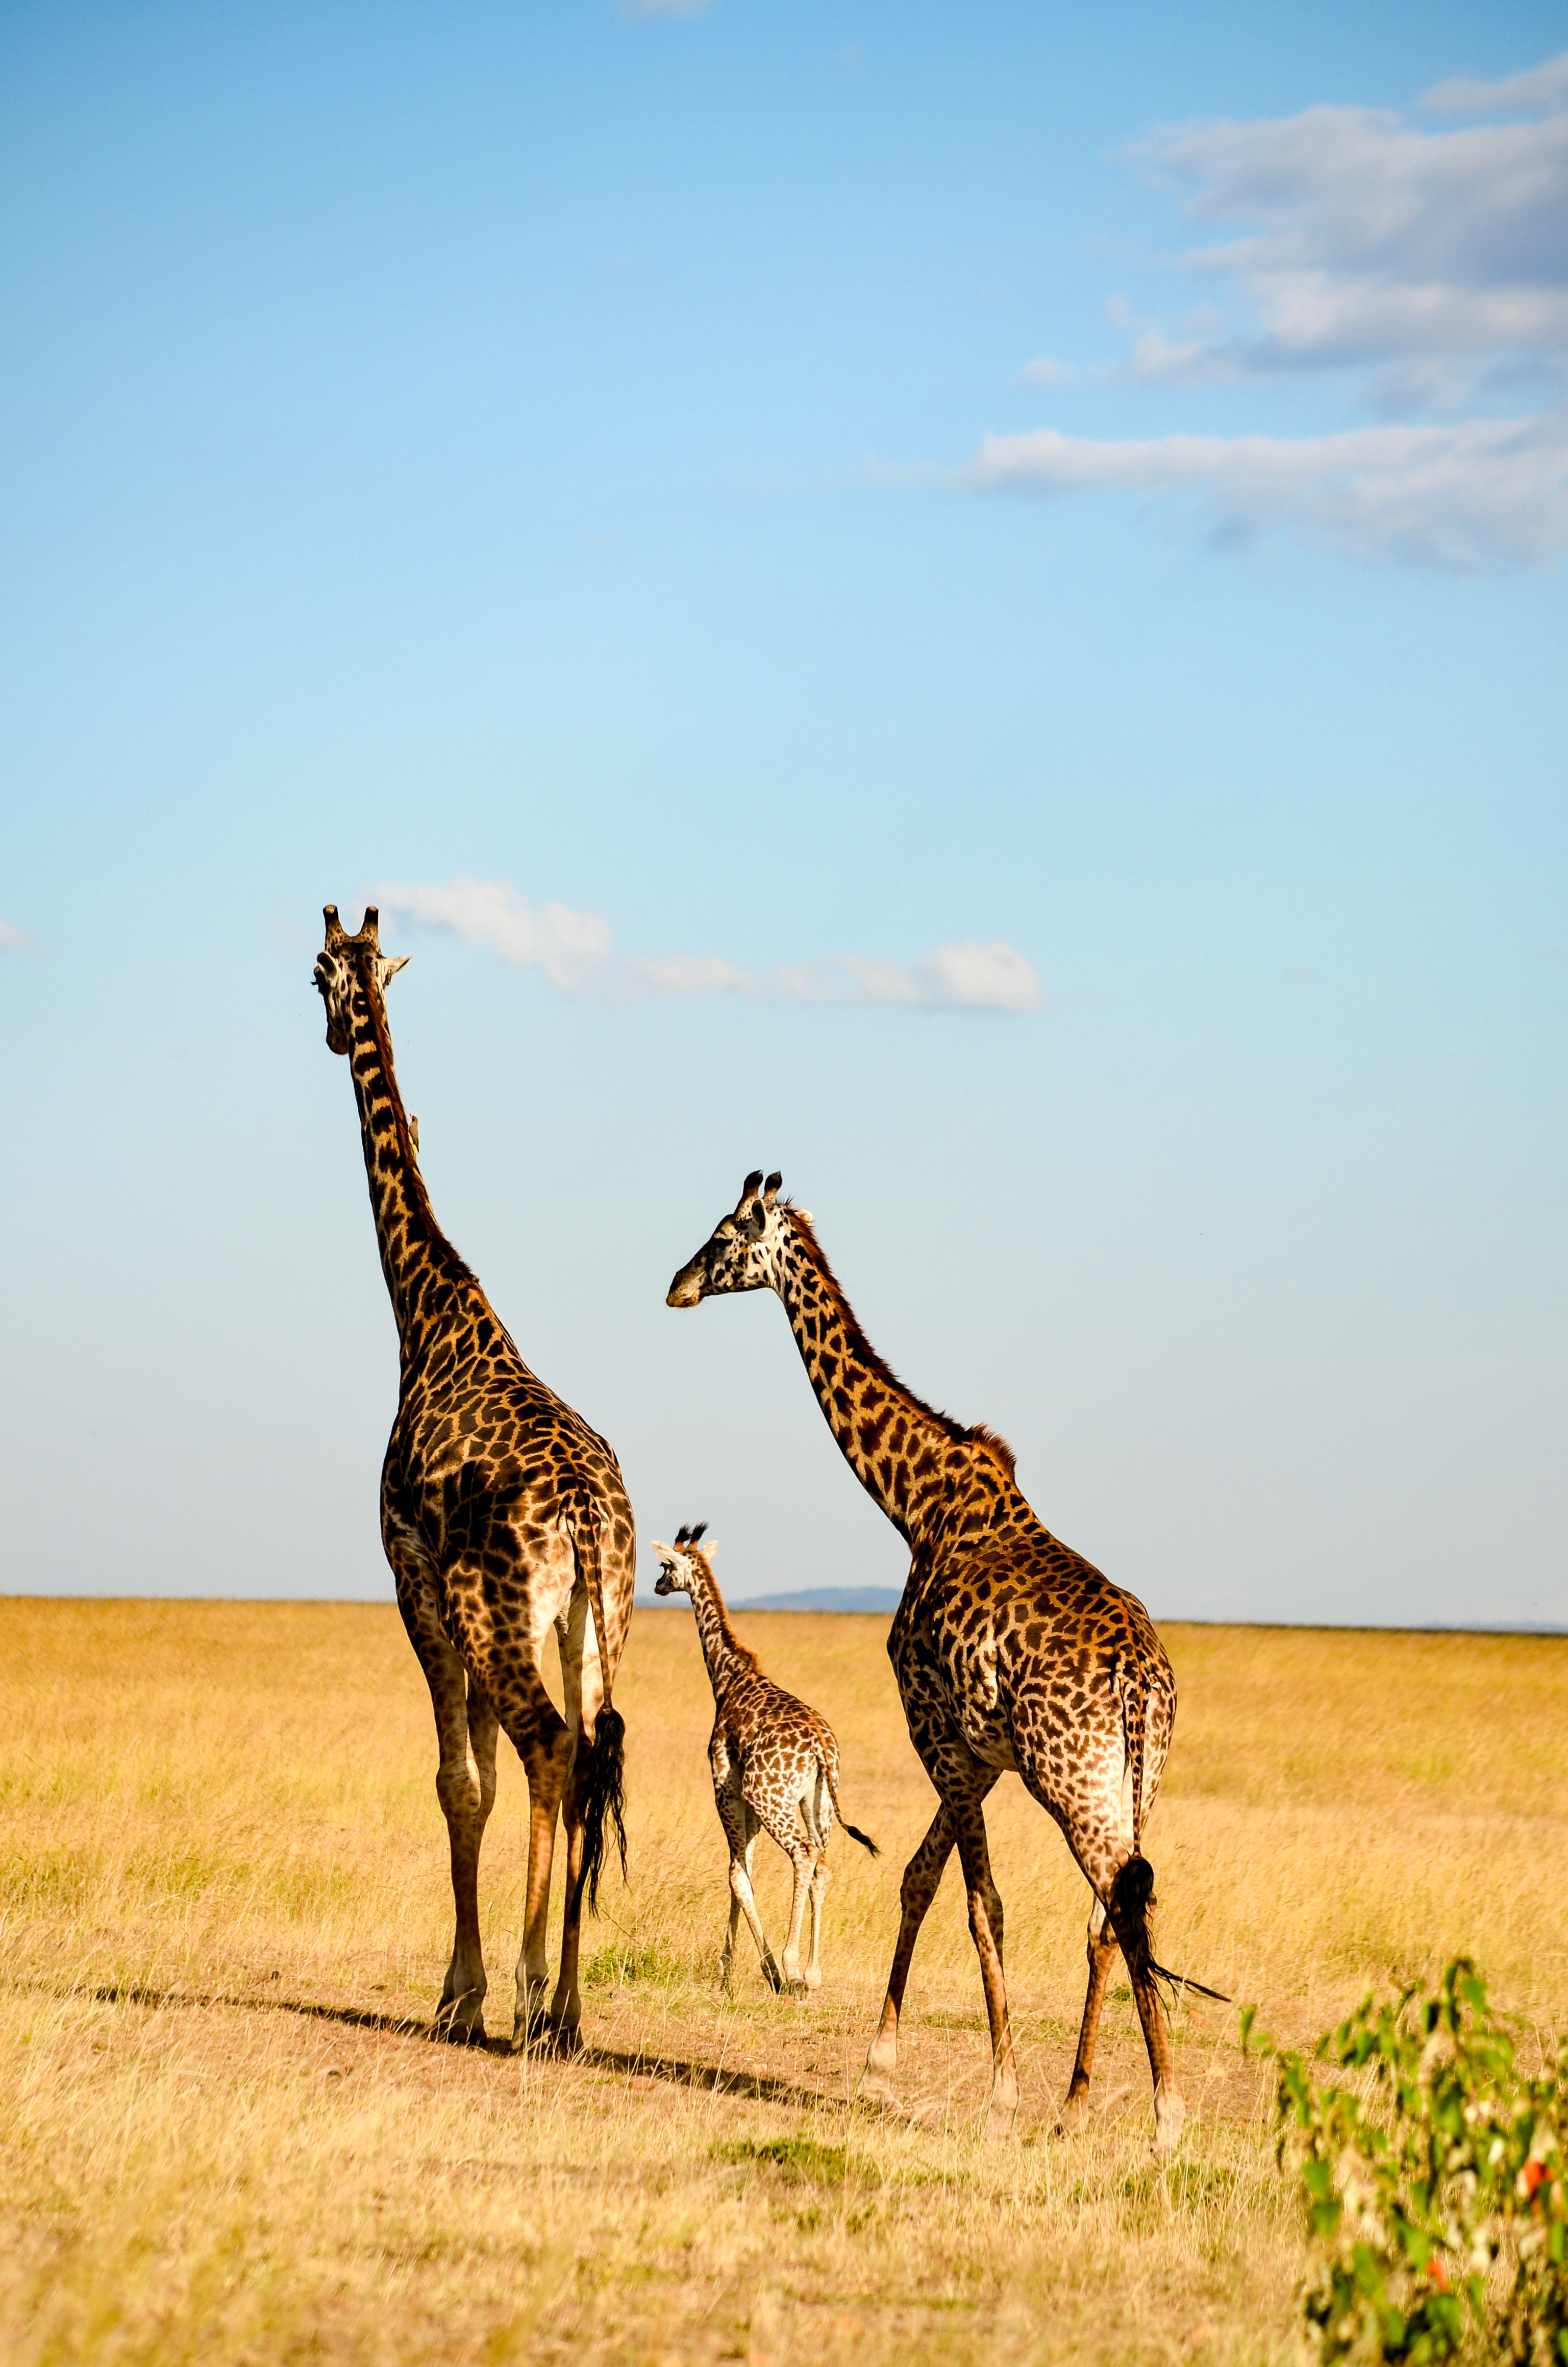 Three brown-and-black giraffes walking photo